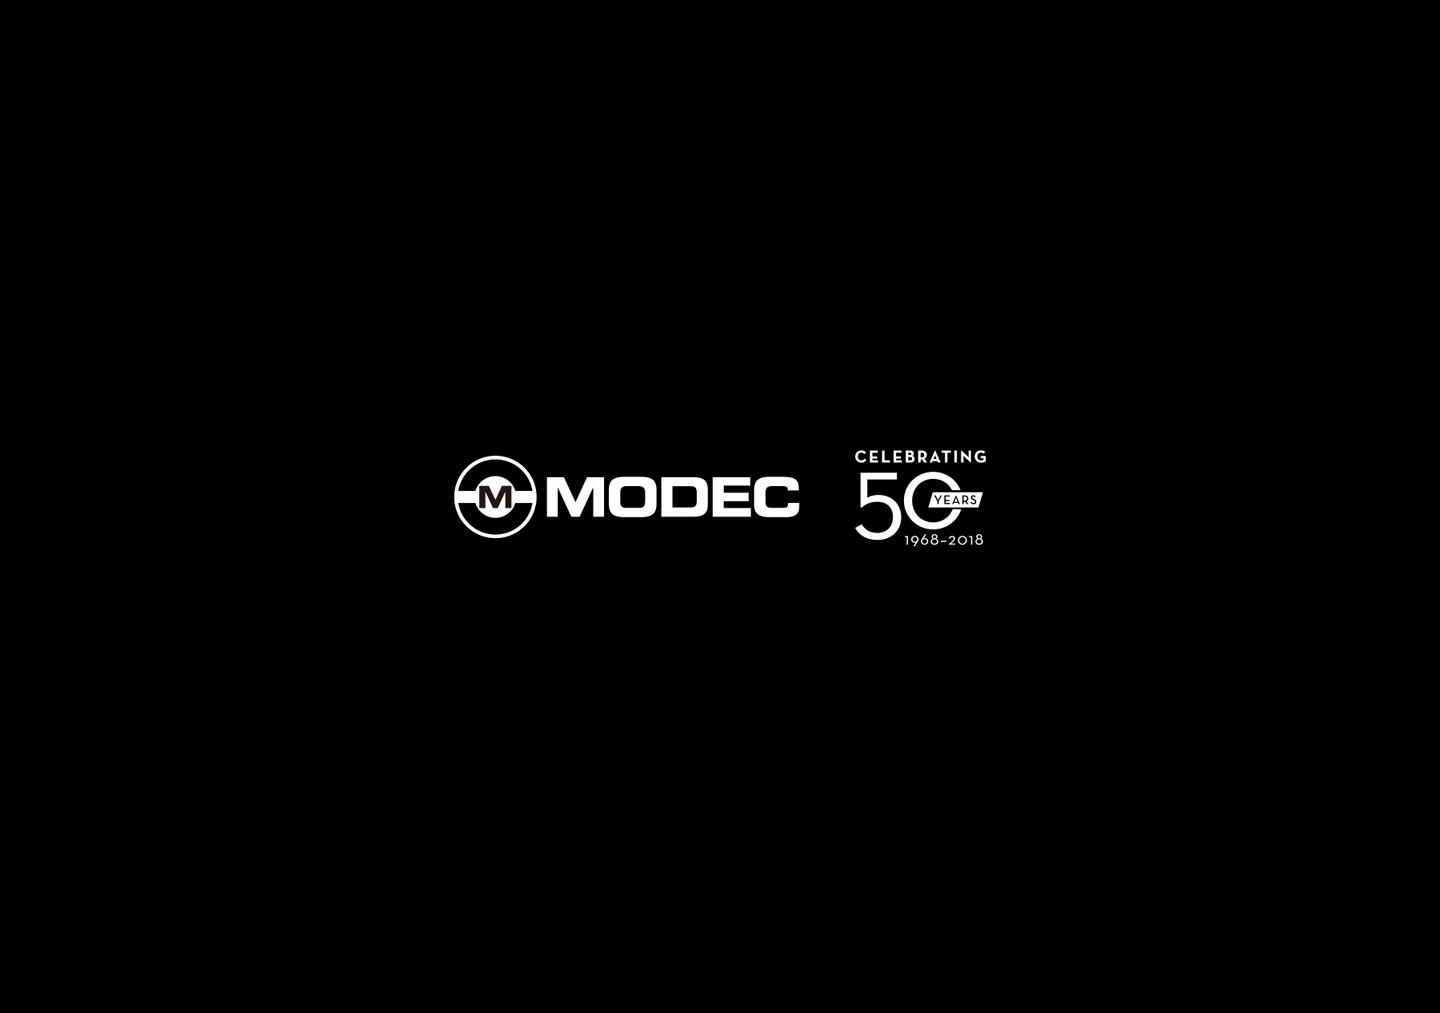 Modec Logo - MODEC 50th Anniversary Website | MODEC